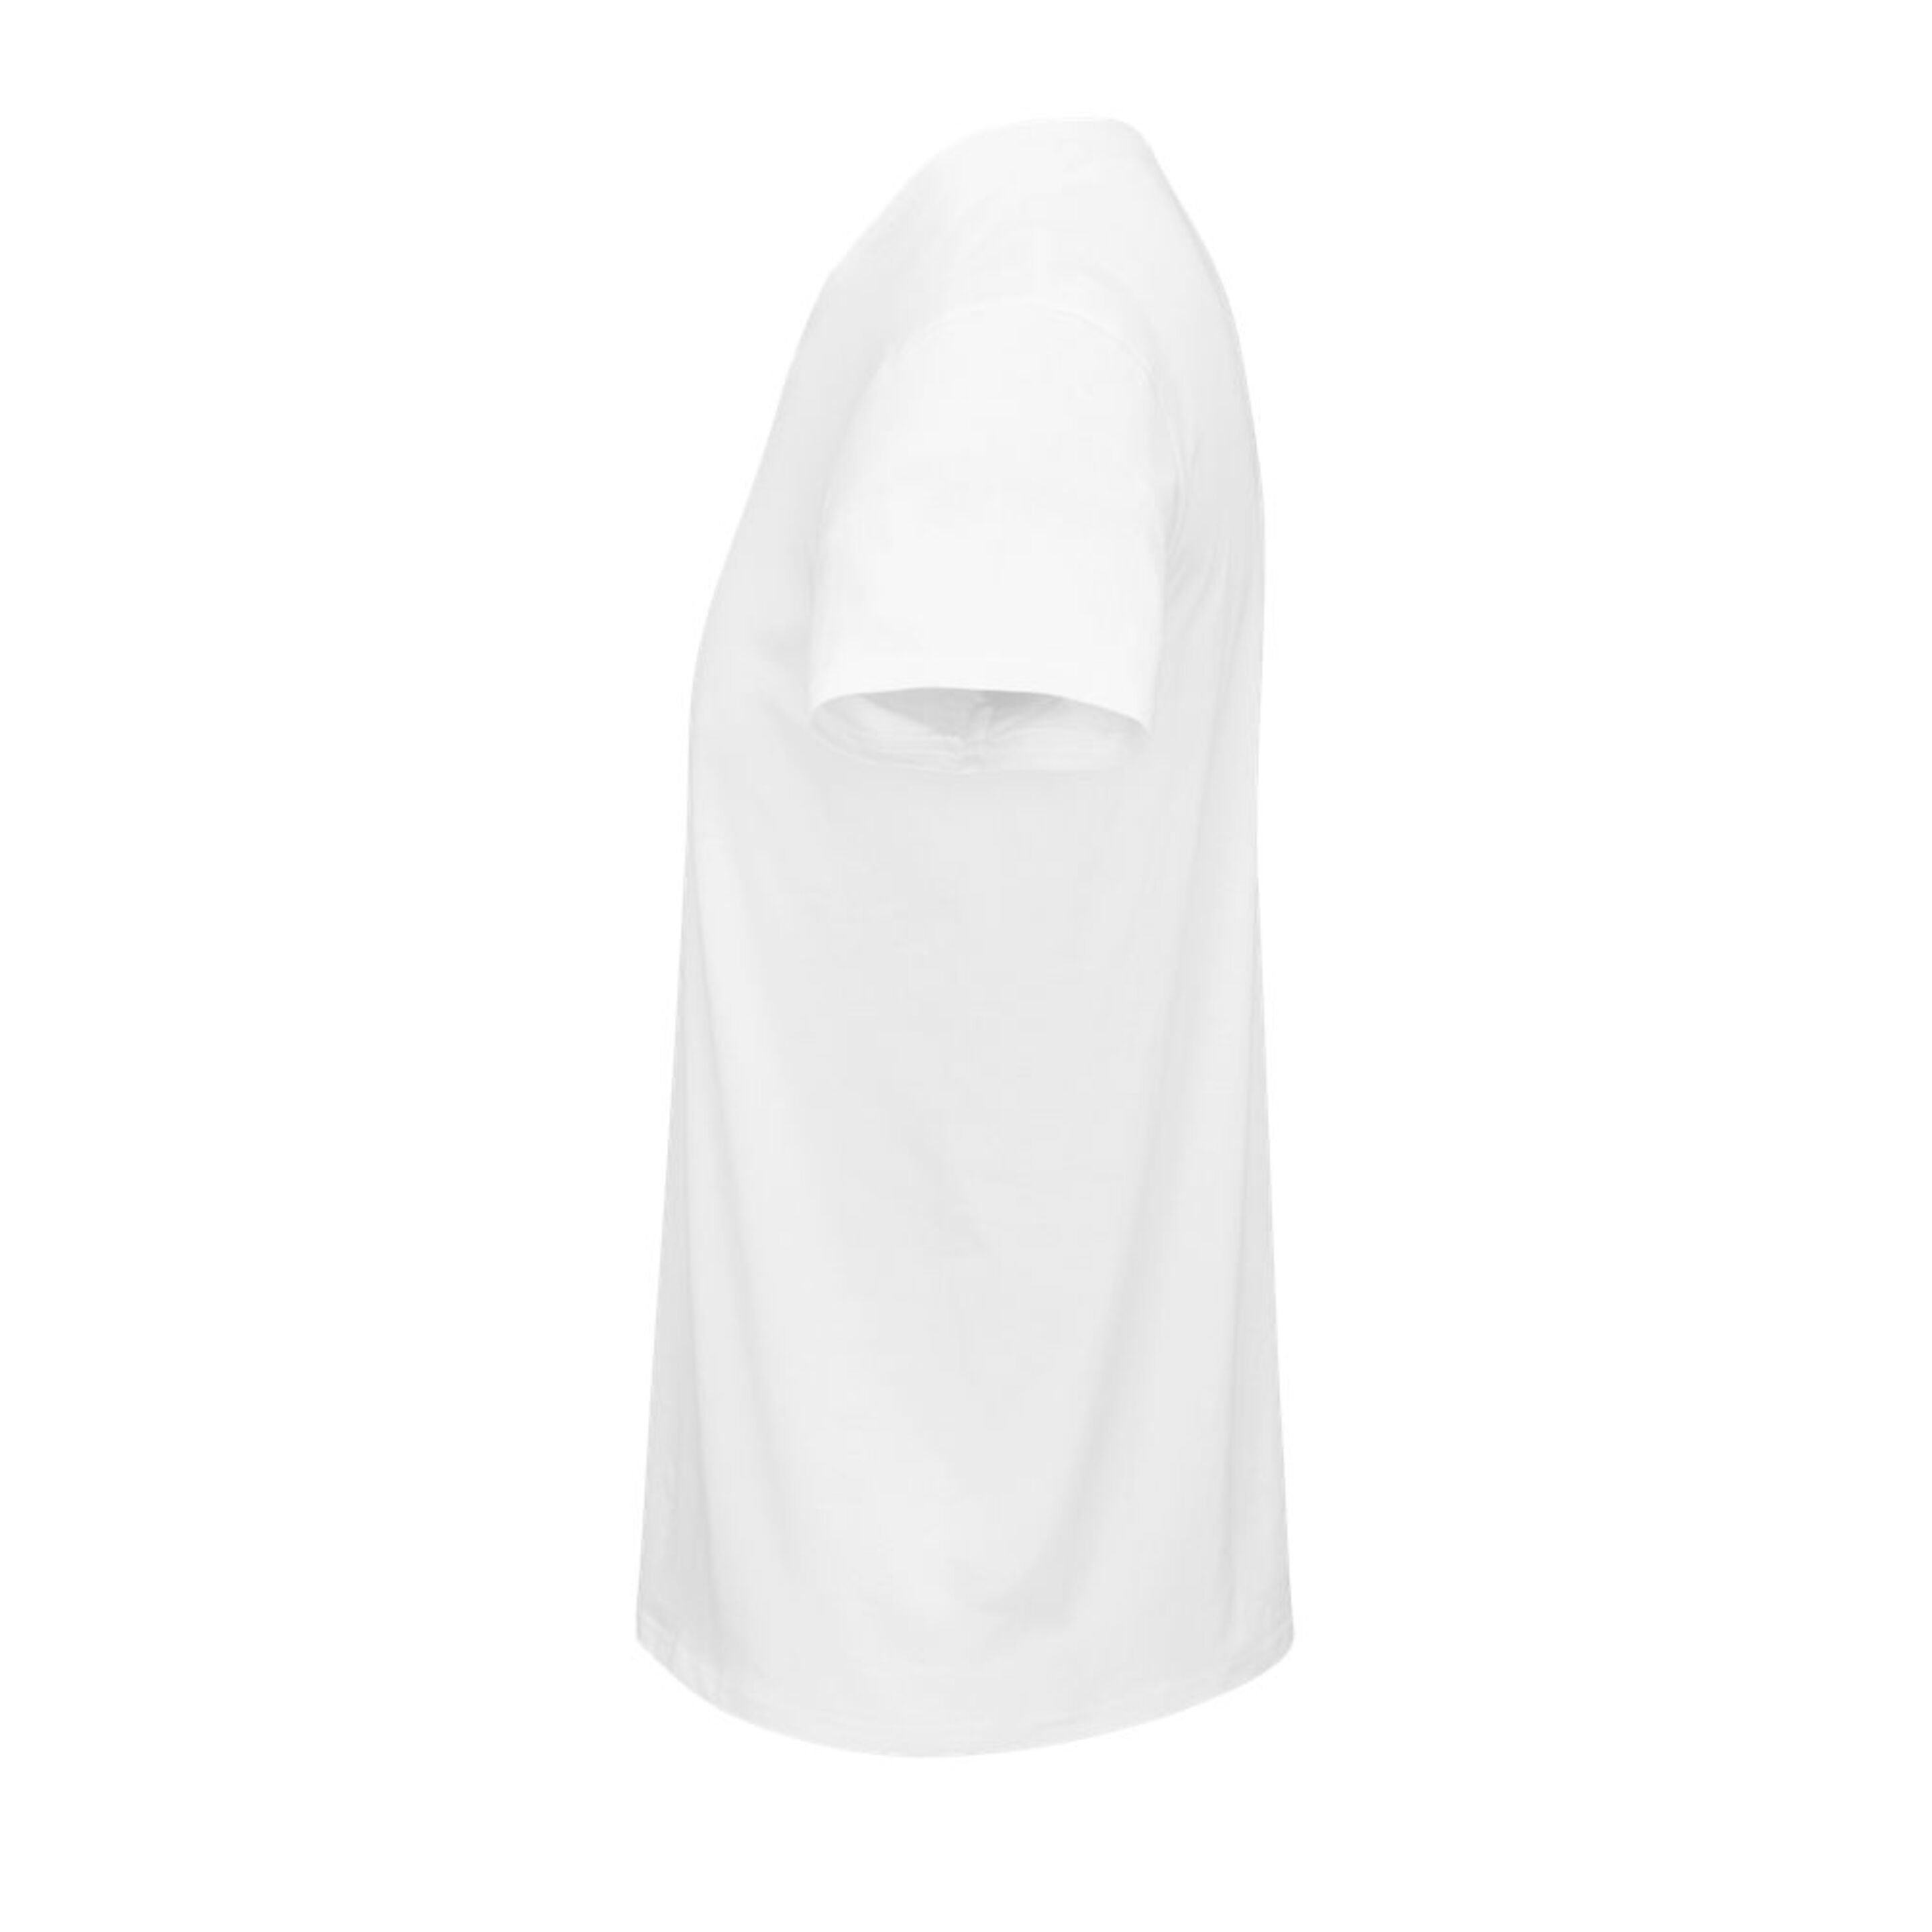 Camiseta Marnaula Crusader - Blanco - Modelo Adulto  MKP